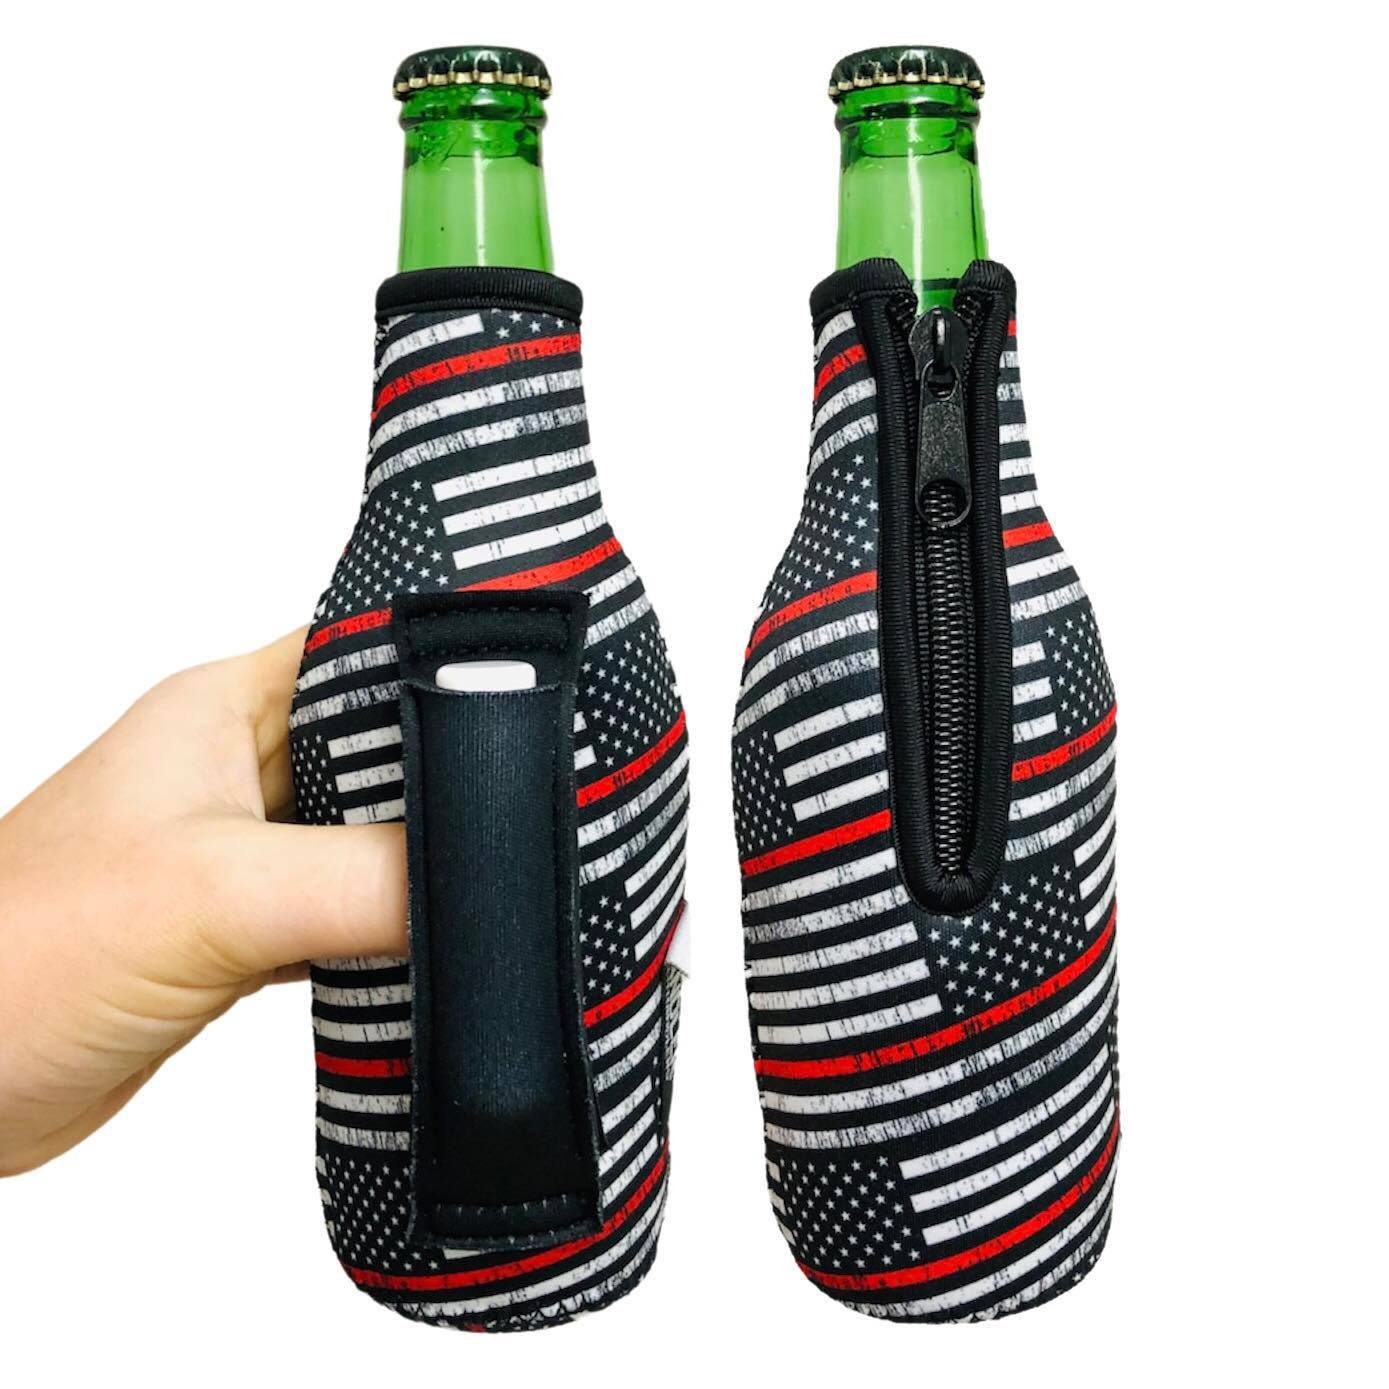 Beer Bottle Insulator Sleeve Zip-up Bottle Jackets Keeps Beer Cold and  HandsWarm